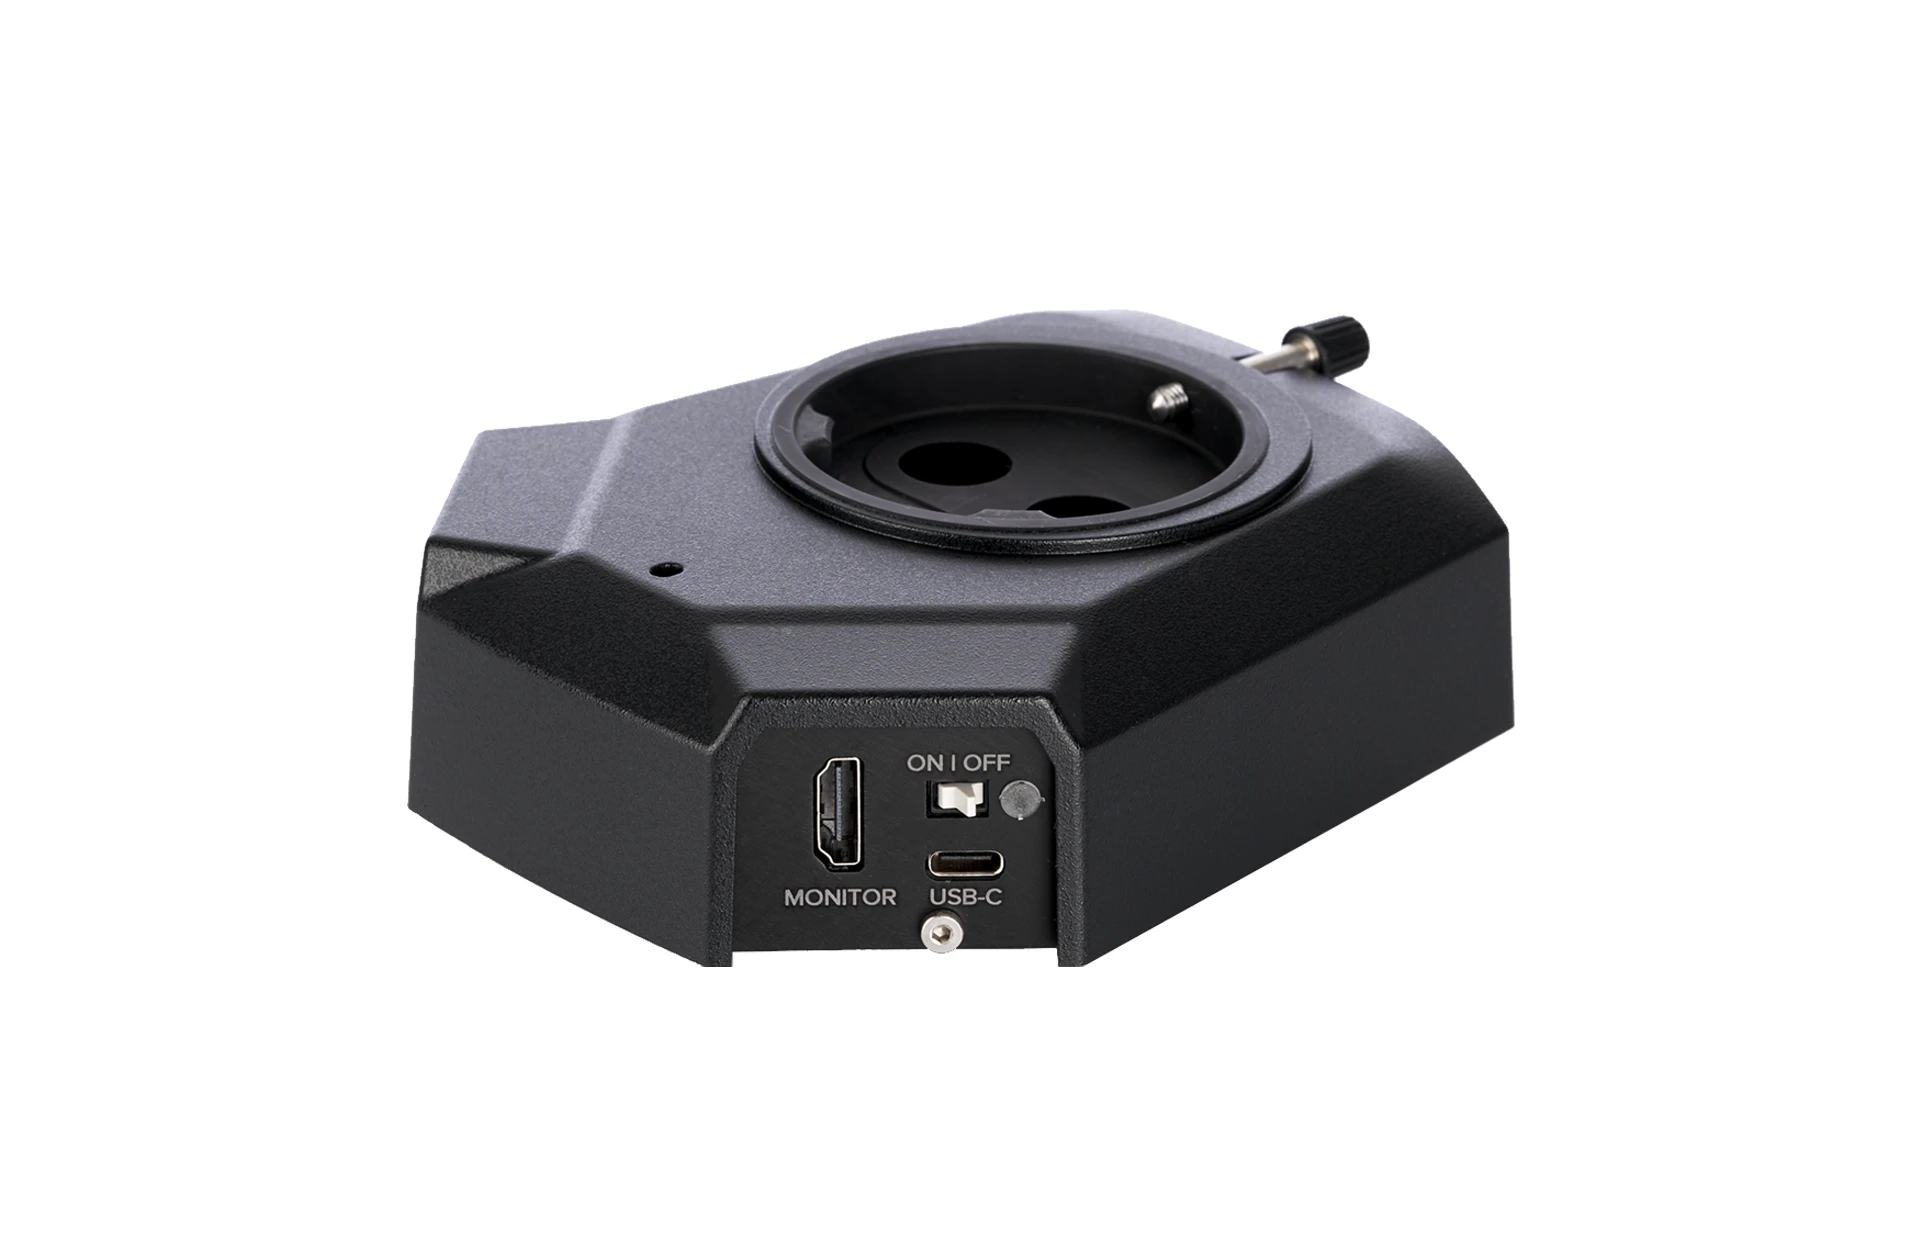 Leica Flexacam i5 (Stereo) Mikroskopkamera linksseitig